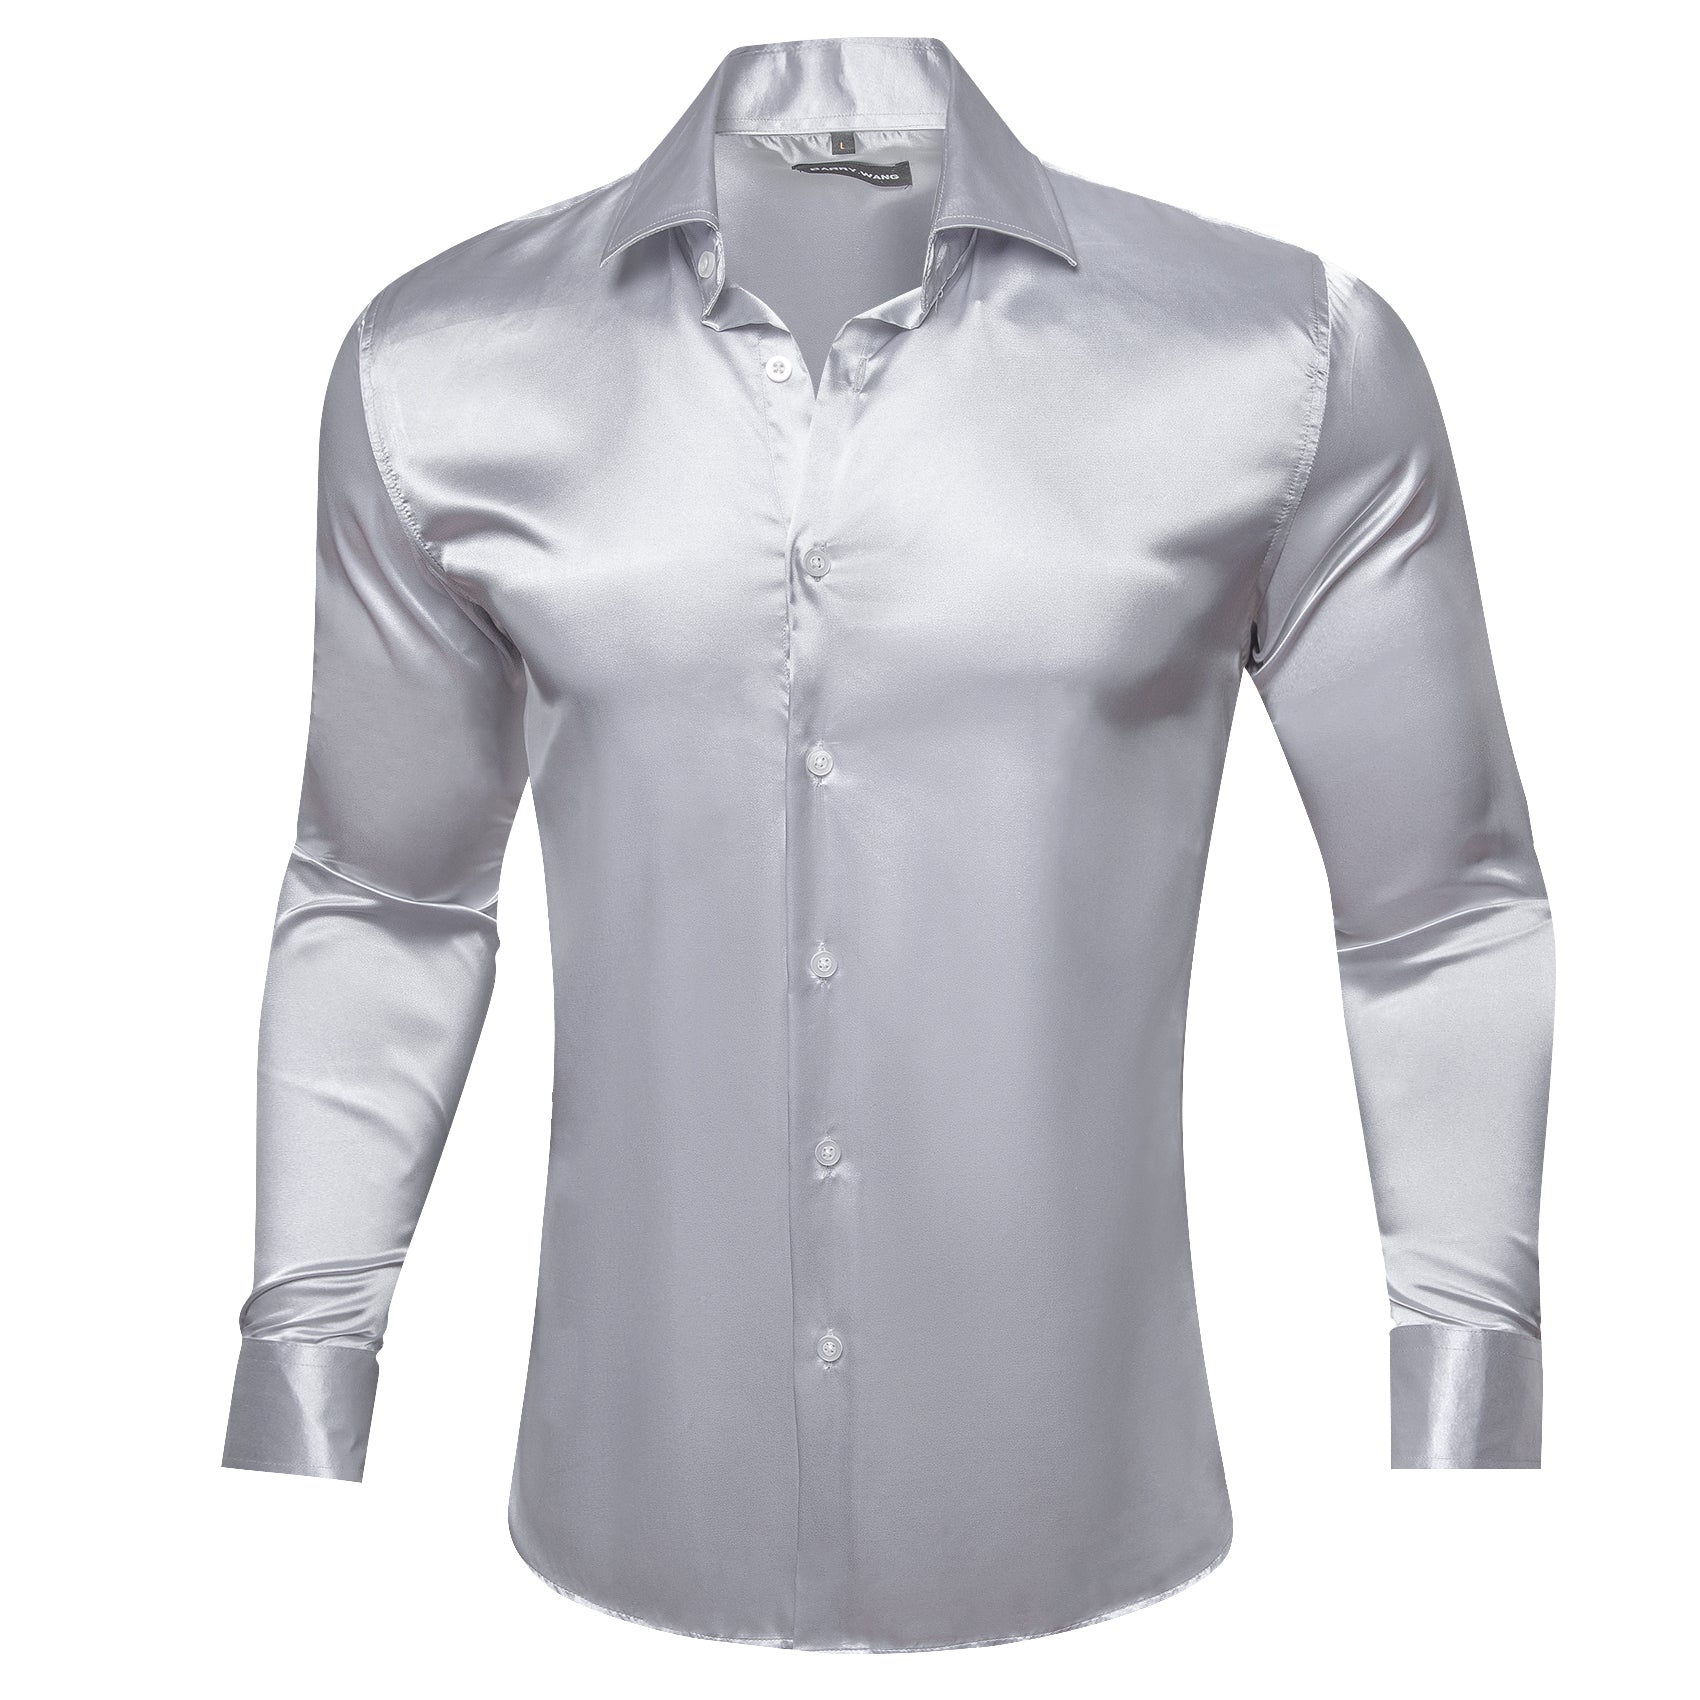 Barry.wang Button Down Shirt Silver Solid Silk Men's Long Sleeve Shirt